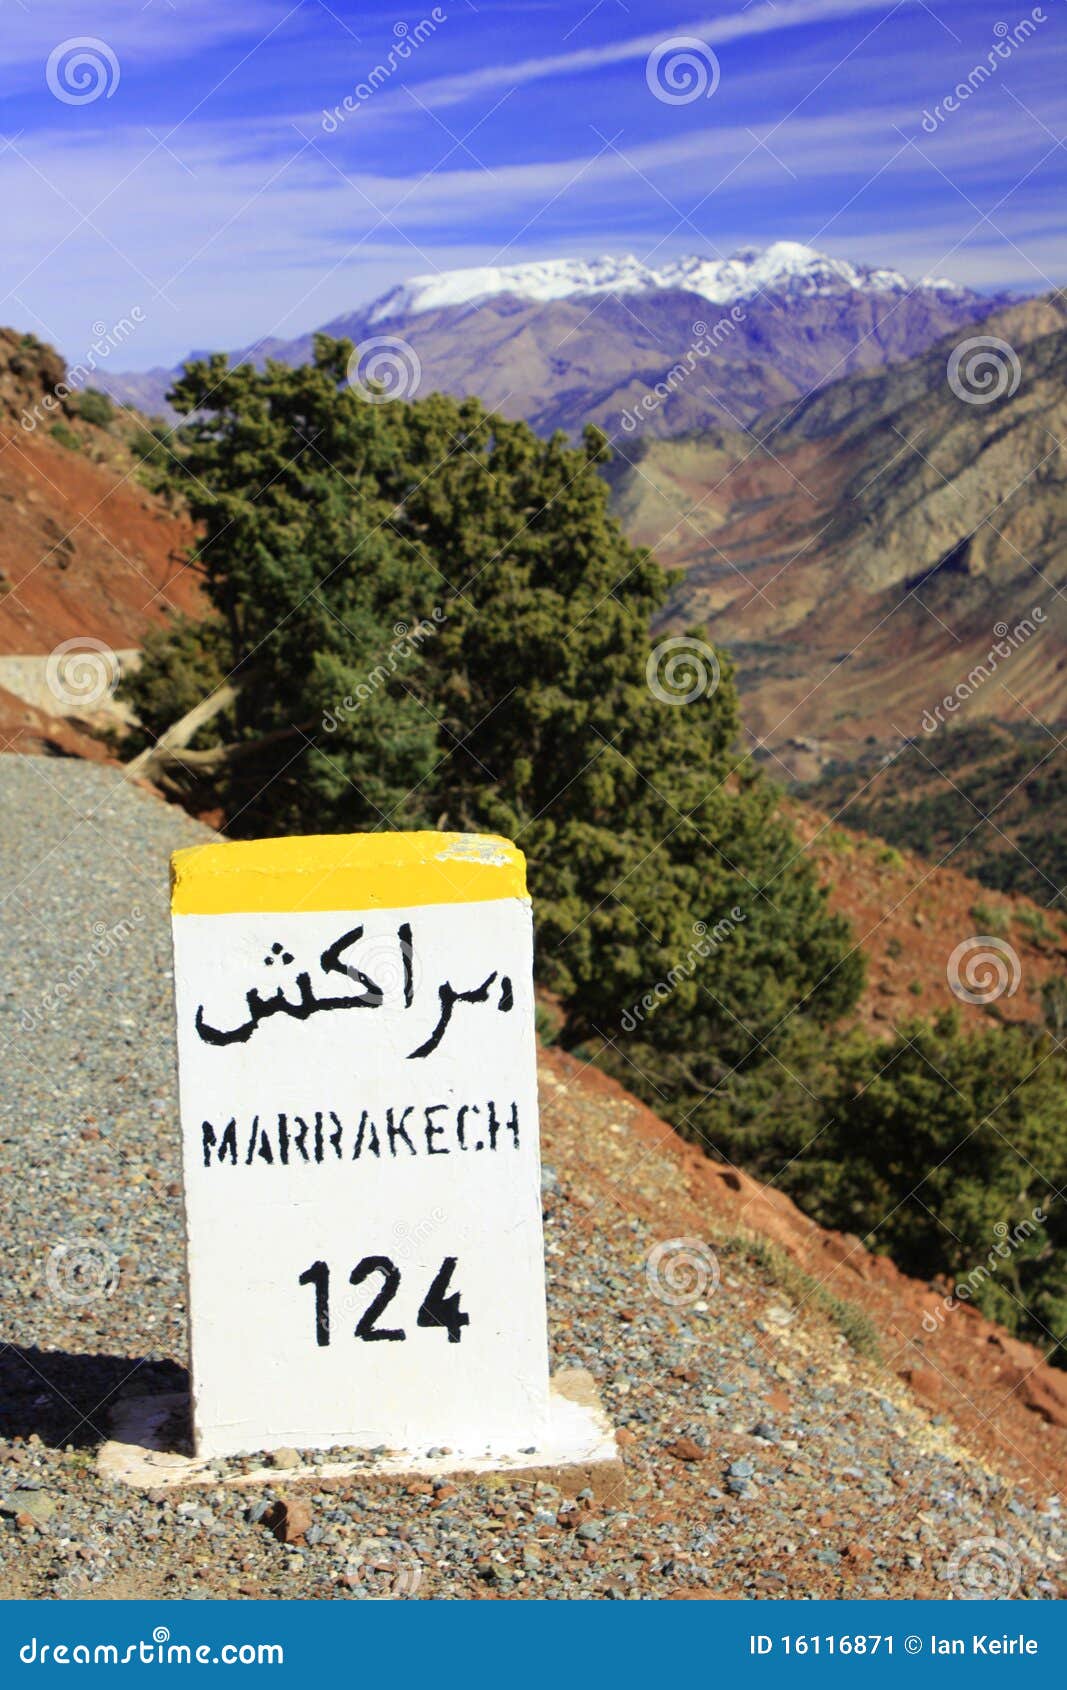 marrakesh sign